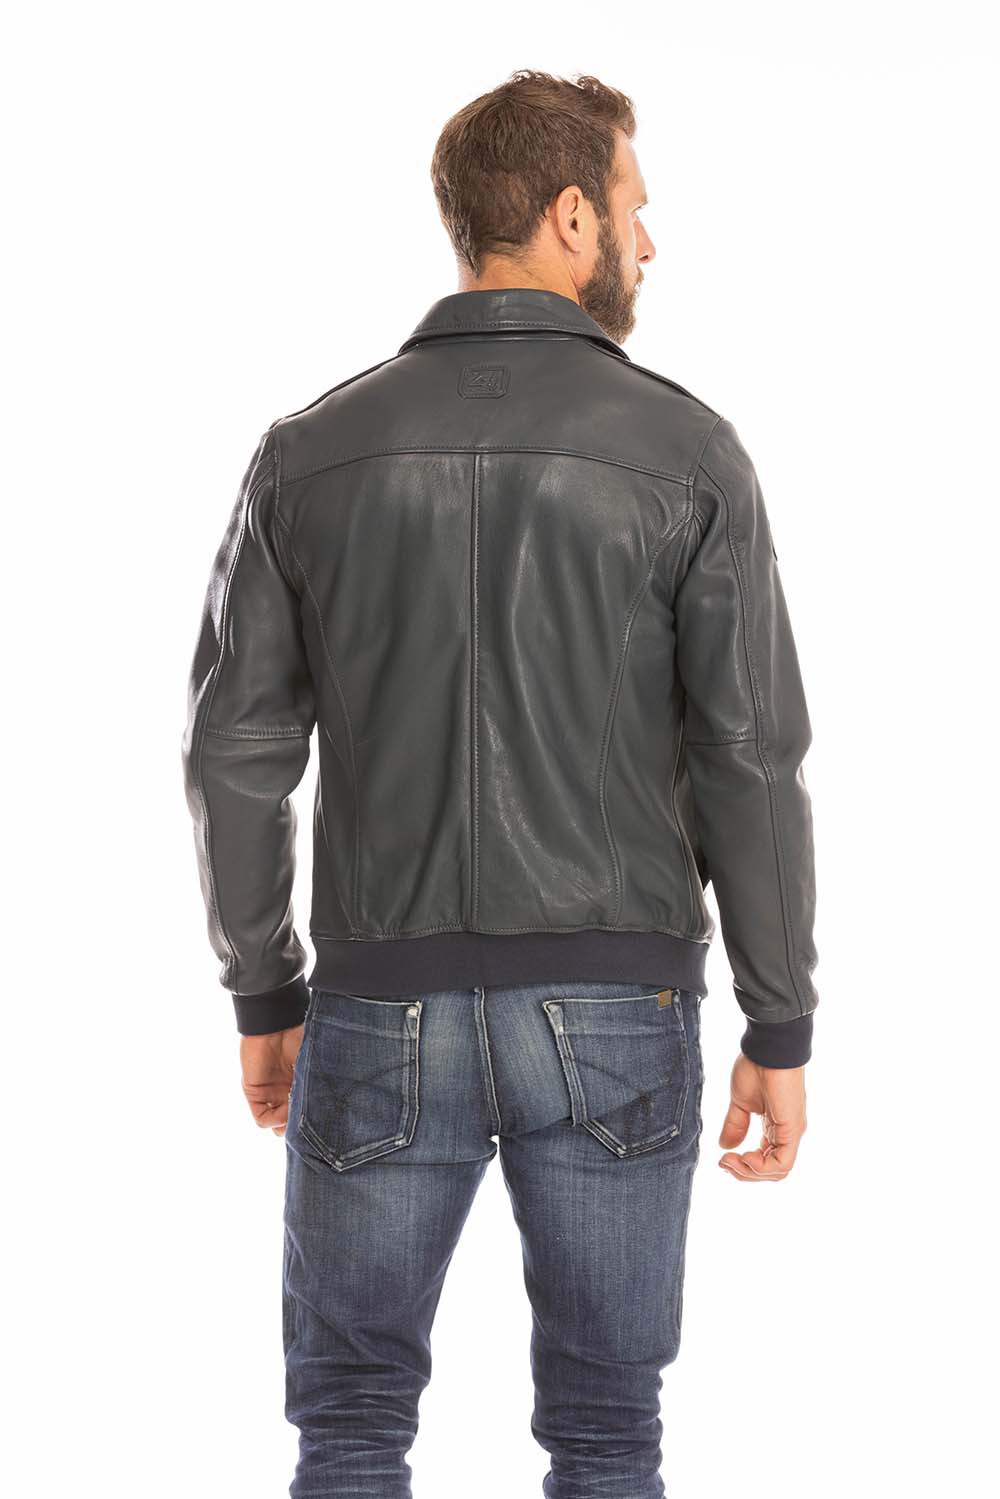 Leather jacket Jacky Ickx Jacky navy blue Men – Classic Legend Motors